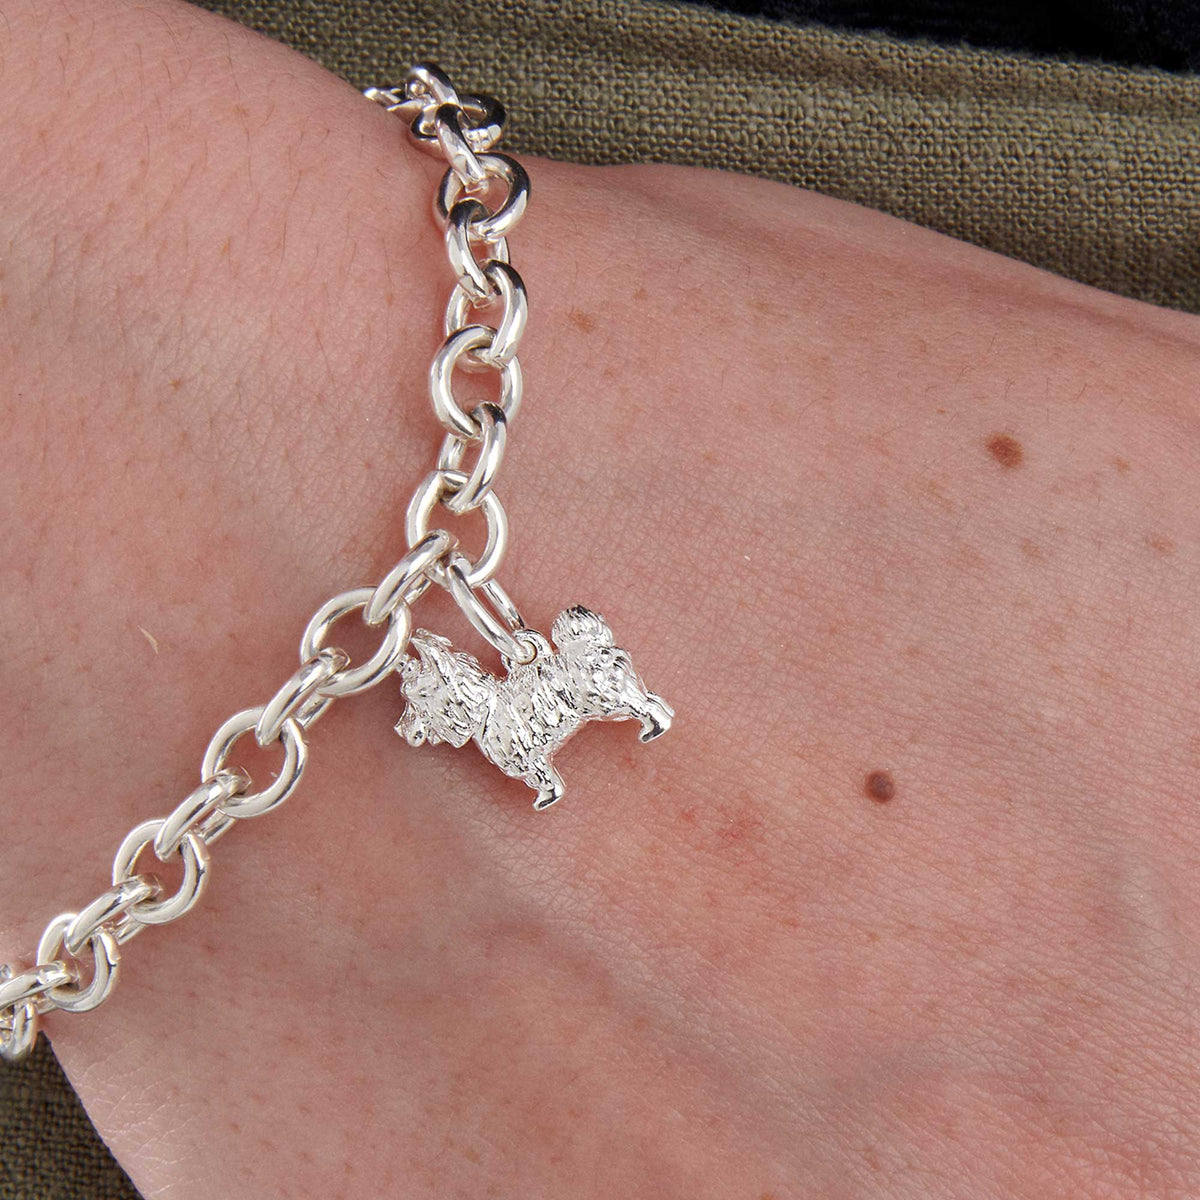 yorkshire terrier silver dog charm bracelet scarlett jewellery brighton uk